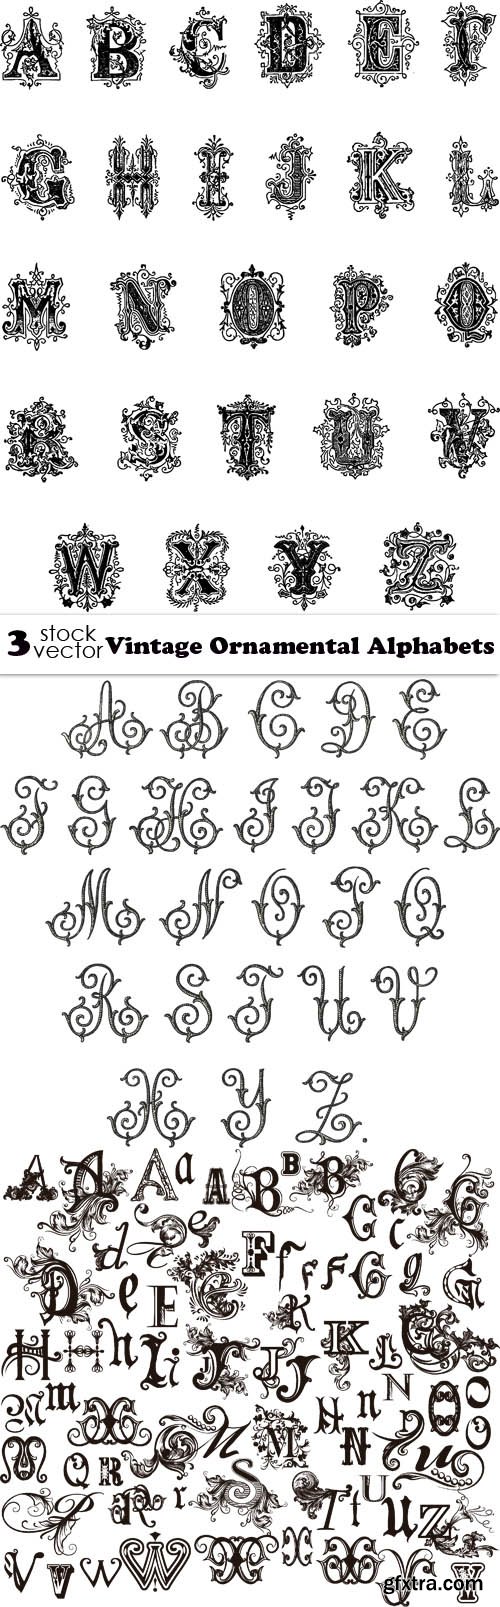 Vectors - Vintage Ornamental Alphabets